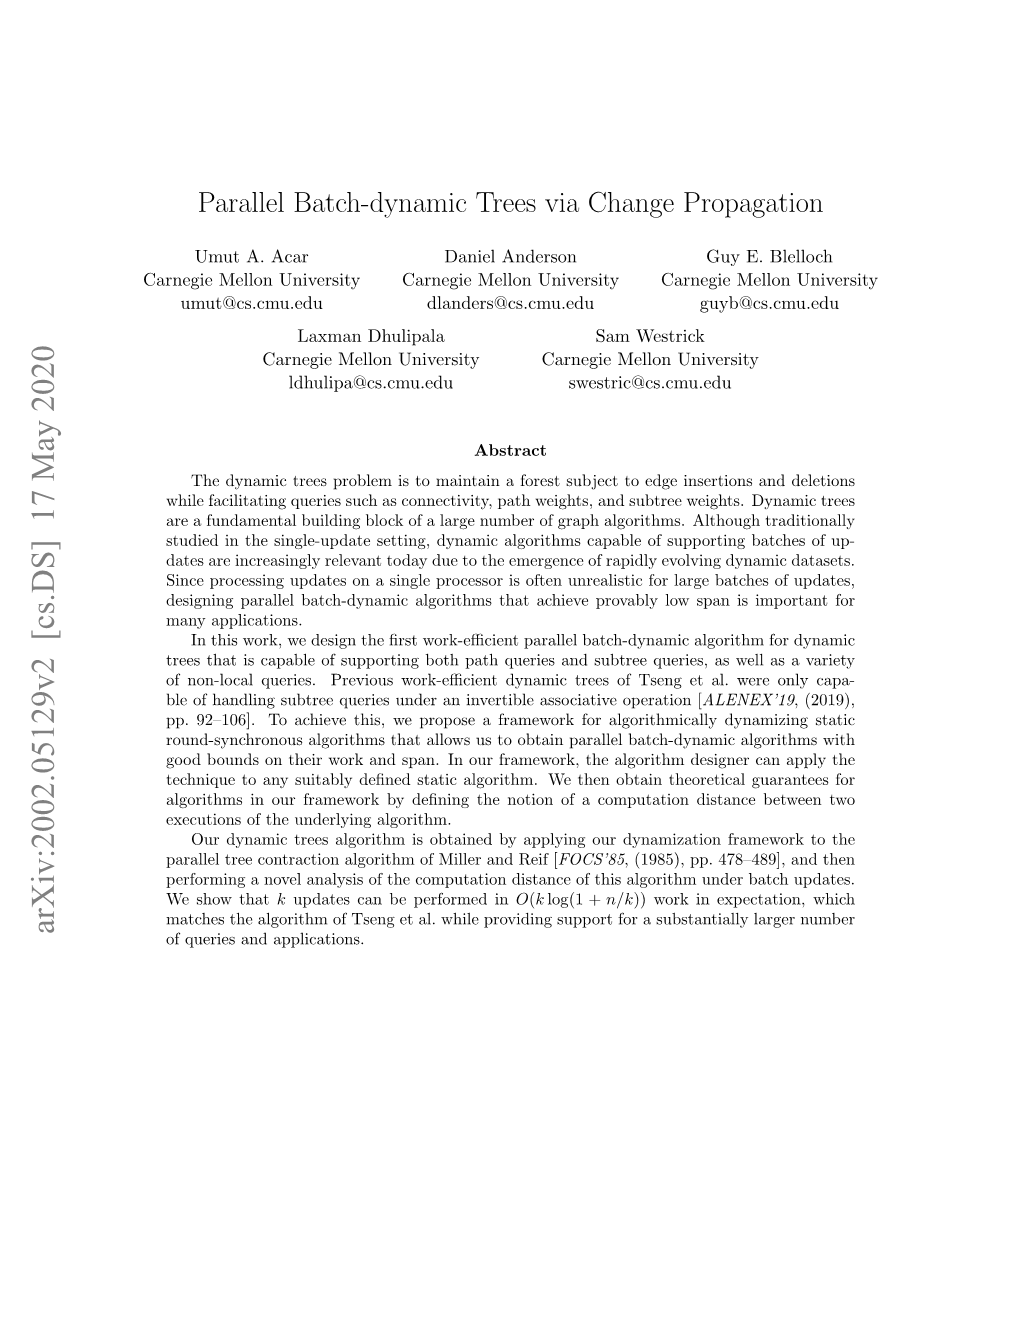 Parallel Batch-Dynamic Trees Via Change Propagation